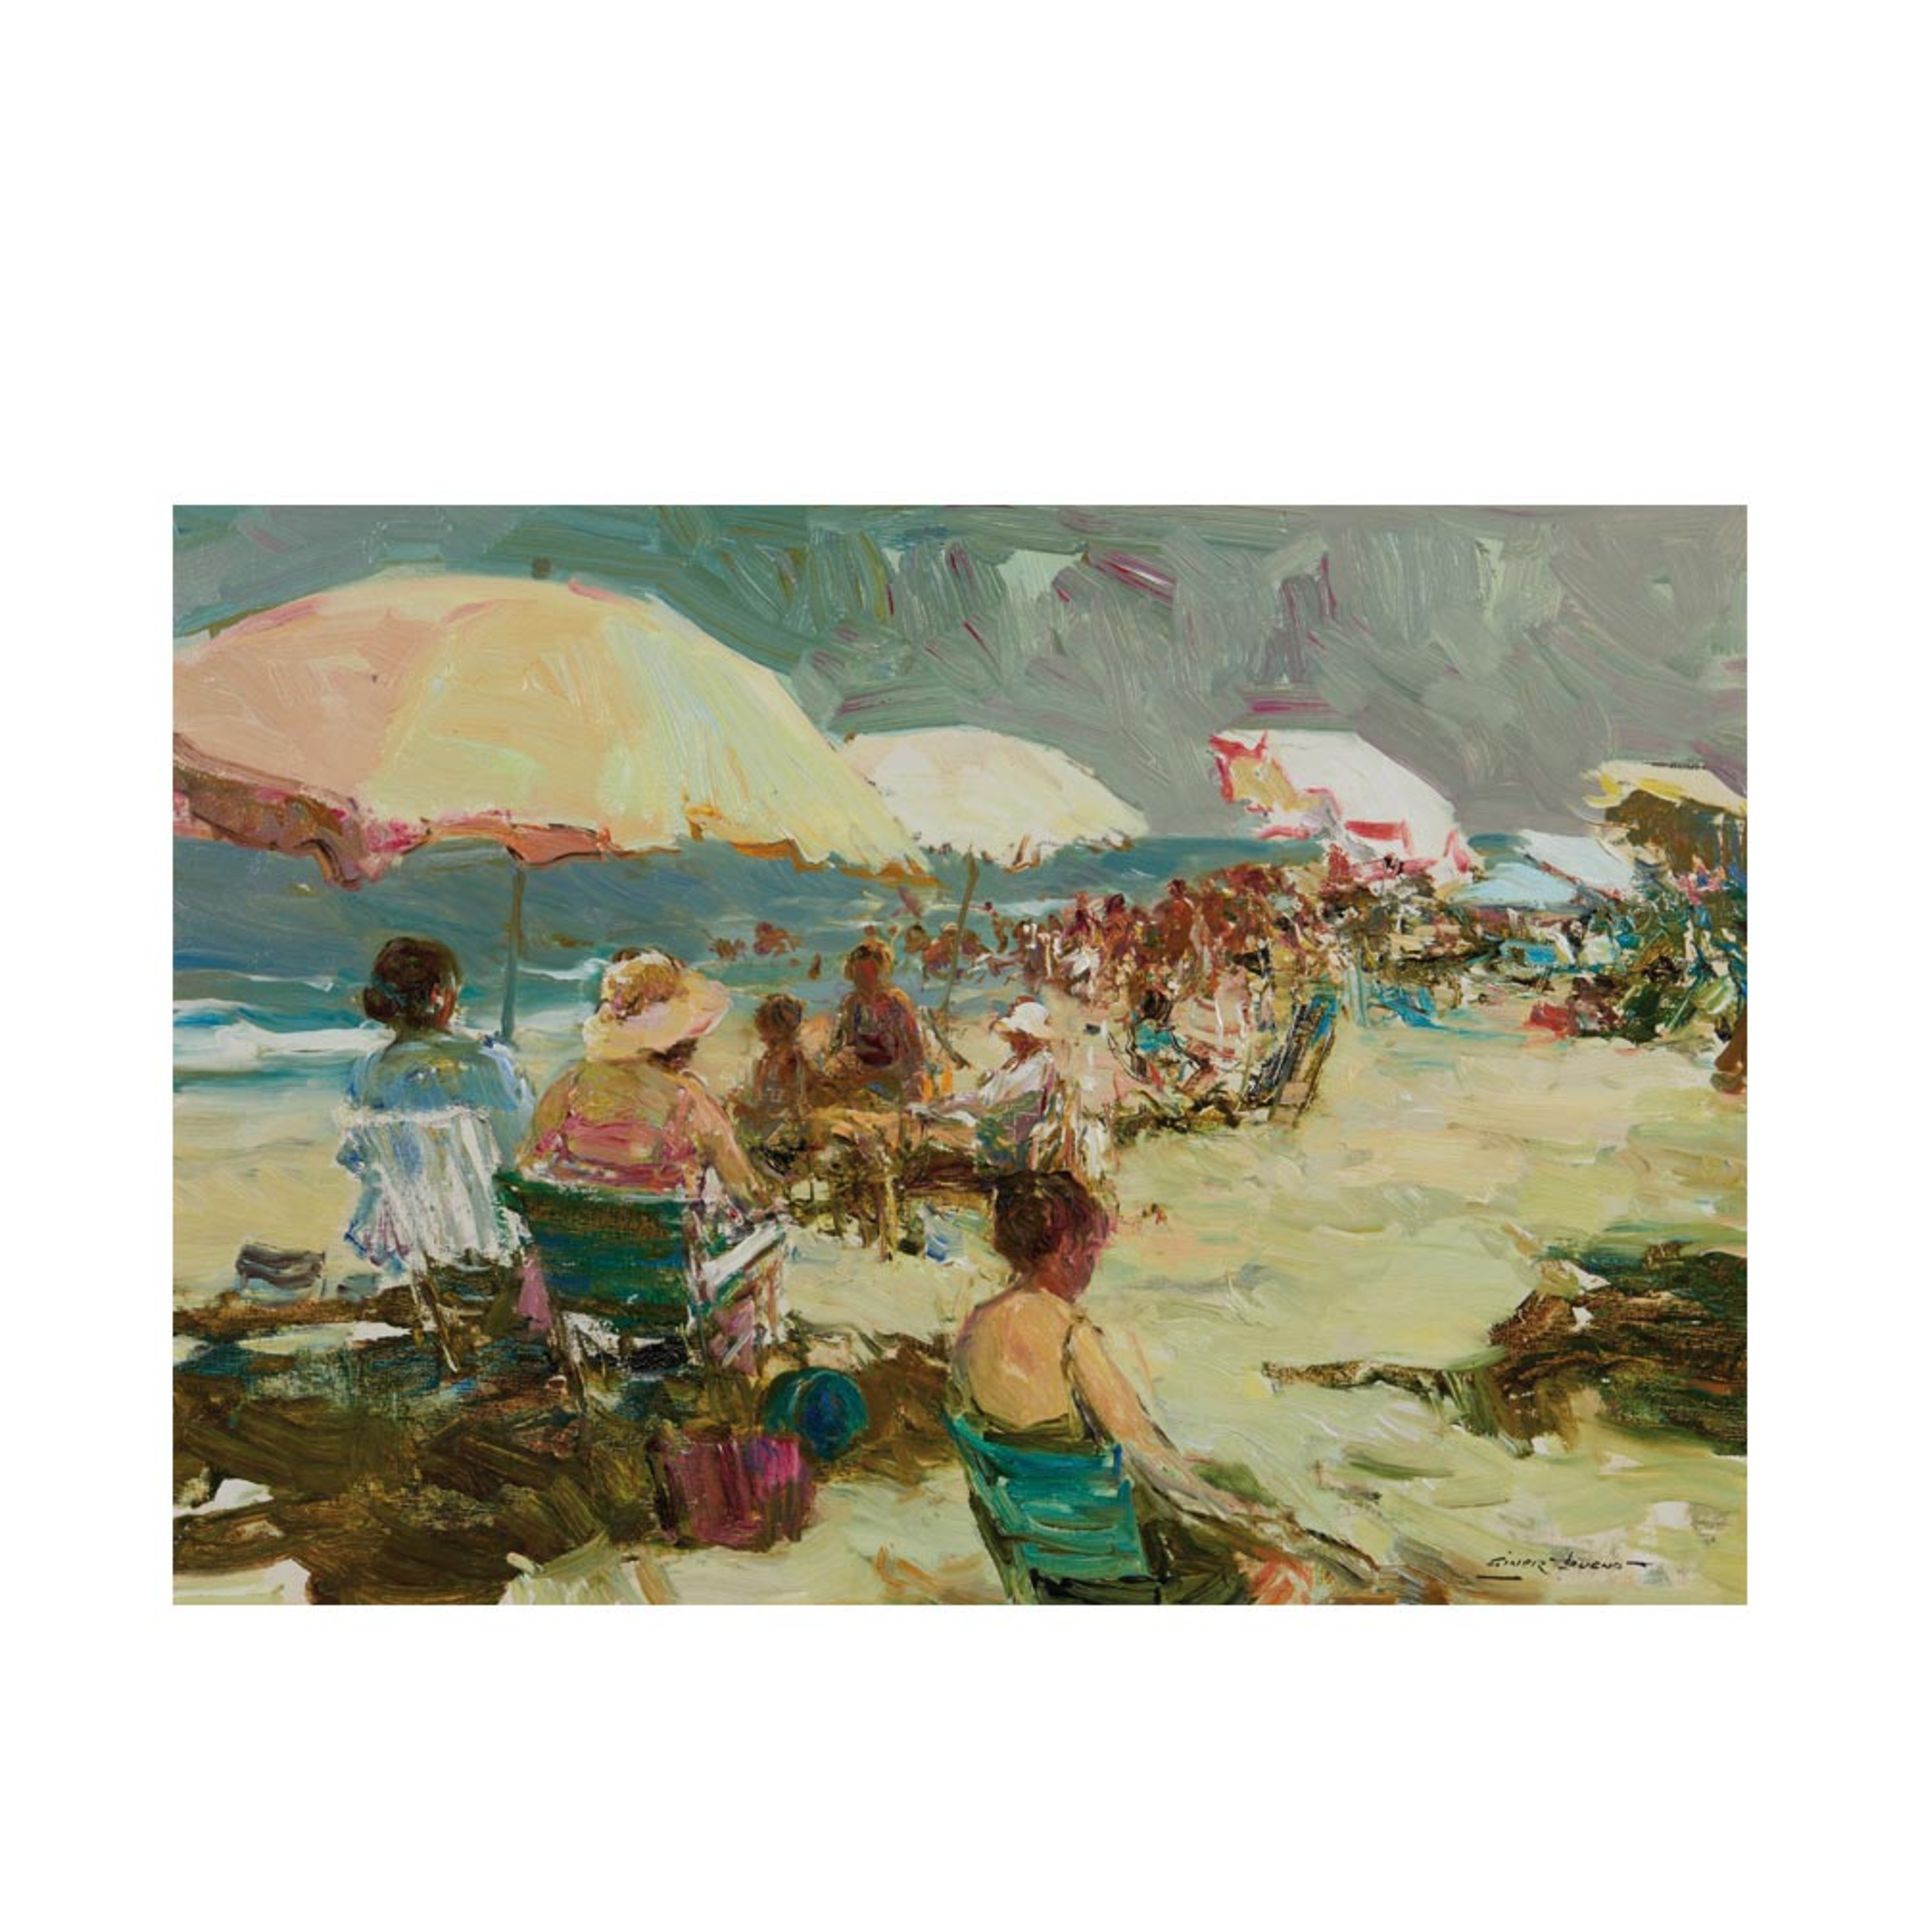 Umbrellas. Oil on canvas